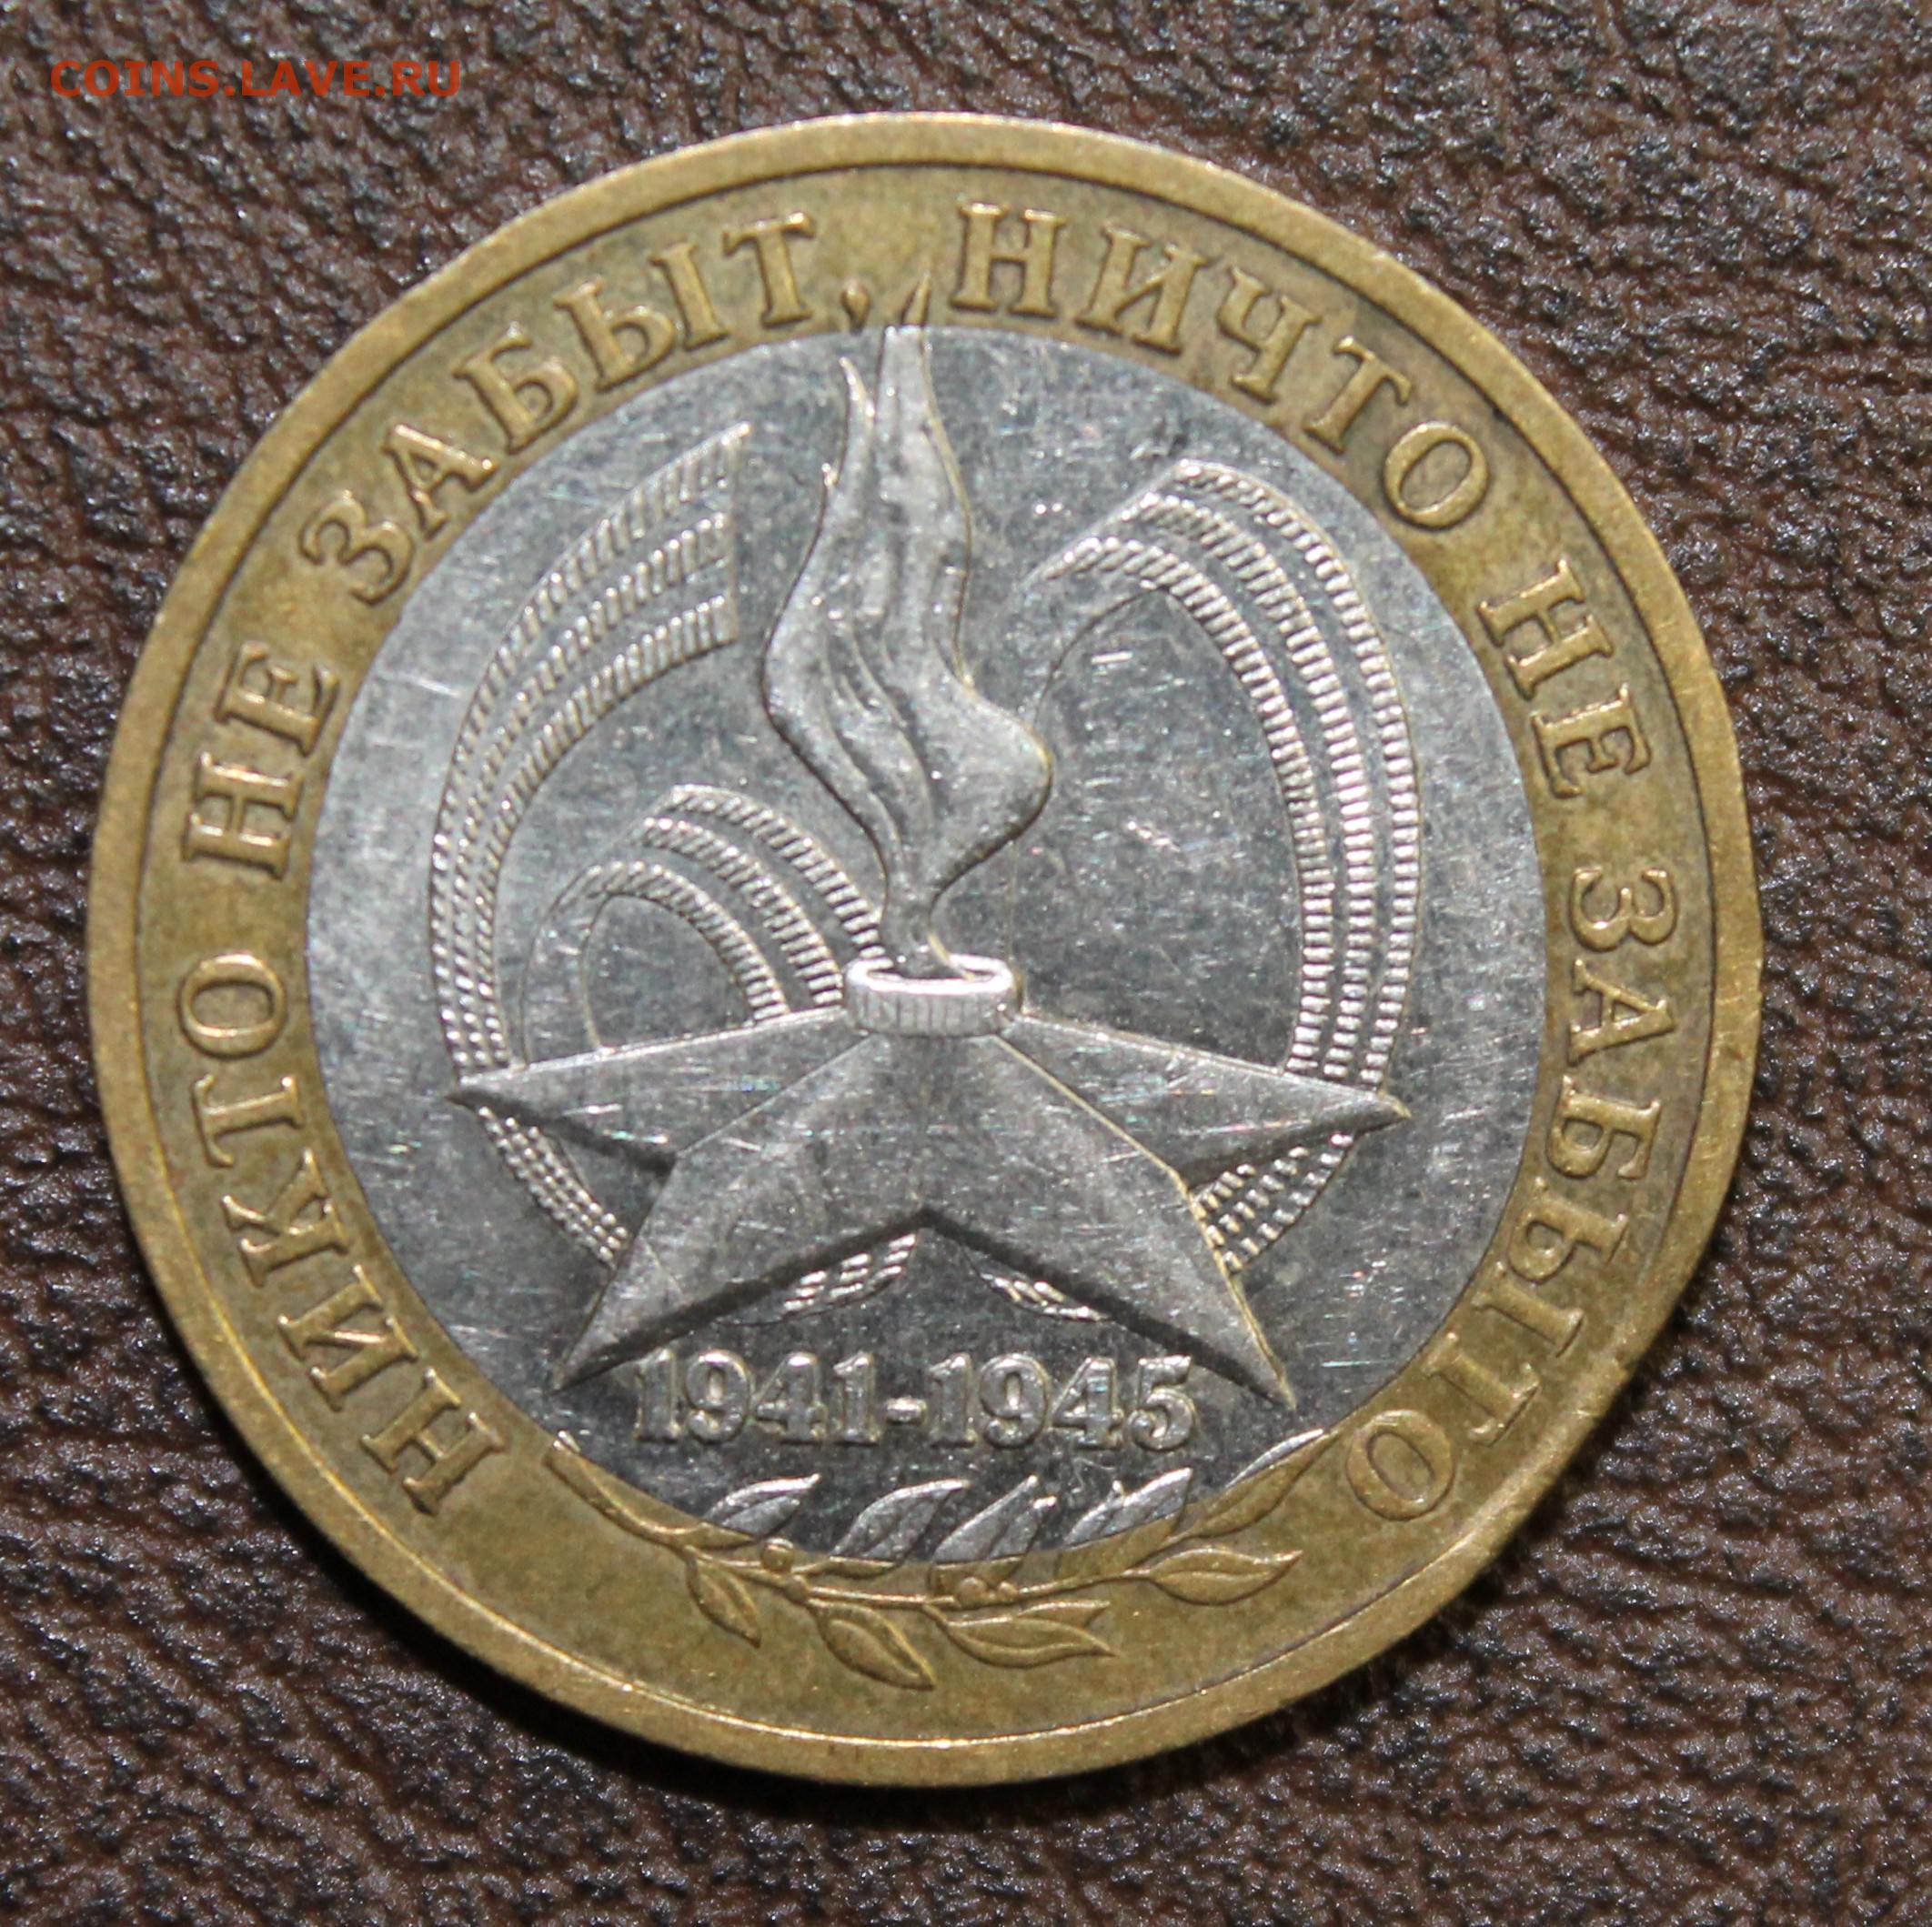 10 рублей никто не забыт 2005 цена. Монета никто не забыт ничто не забыто. Монета ничто не забыто никто не забыт ММД. 10 Рублей никто не забыт ничто не забыто. Знак ММД победа Катюша 2005.